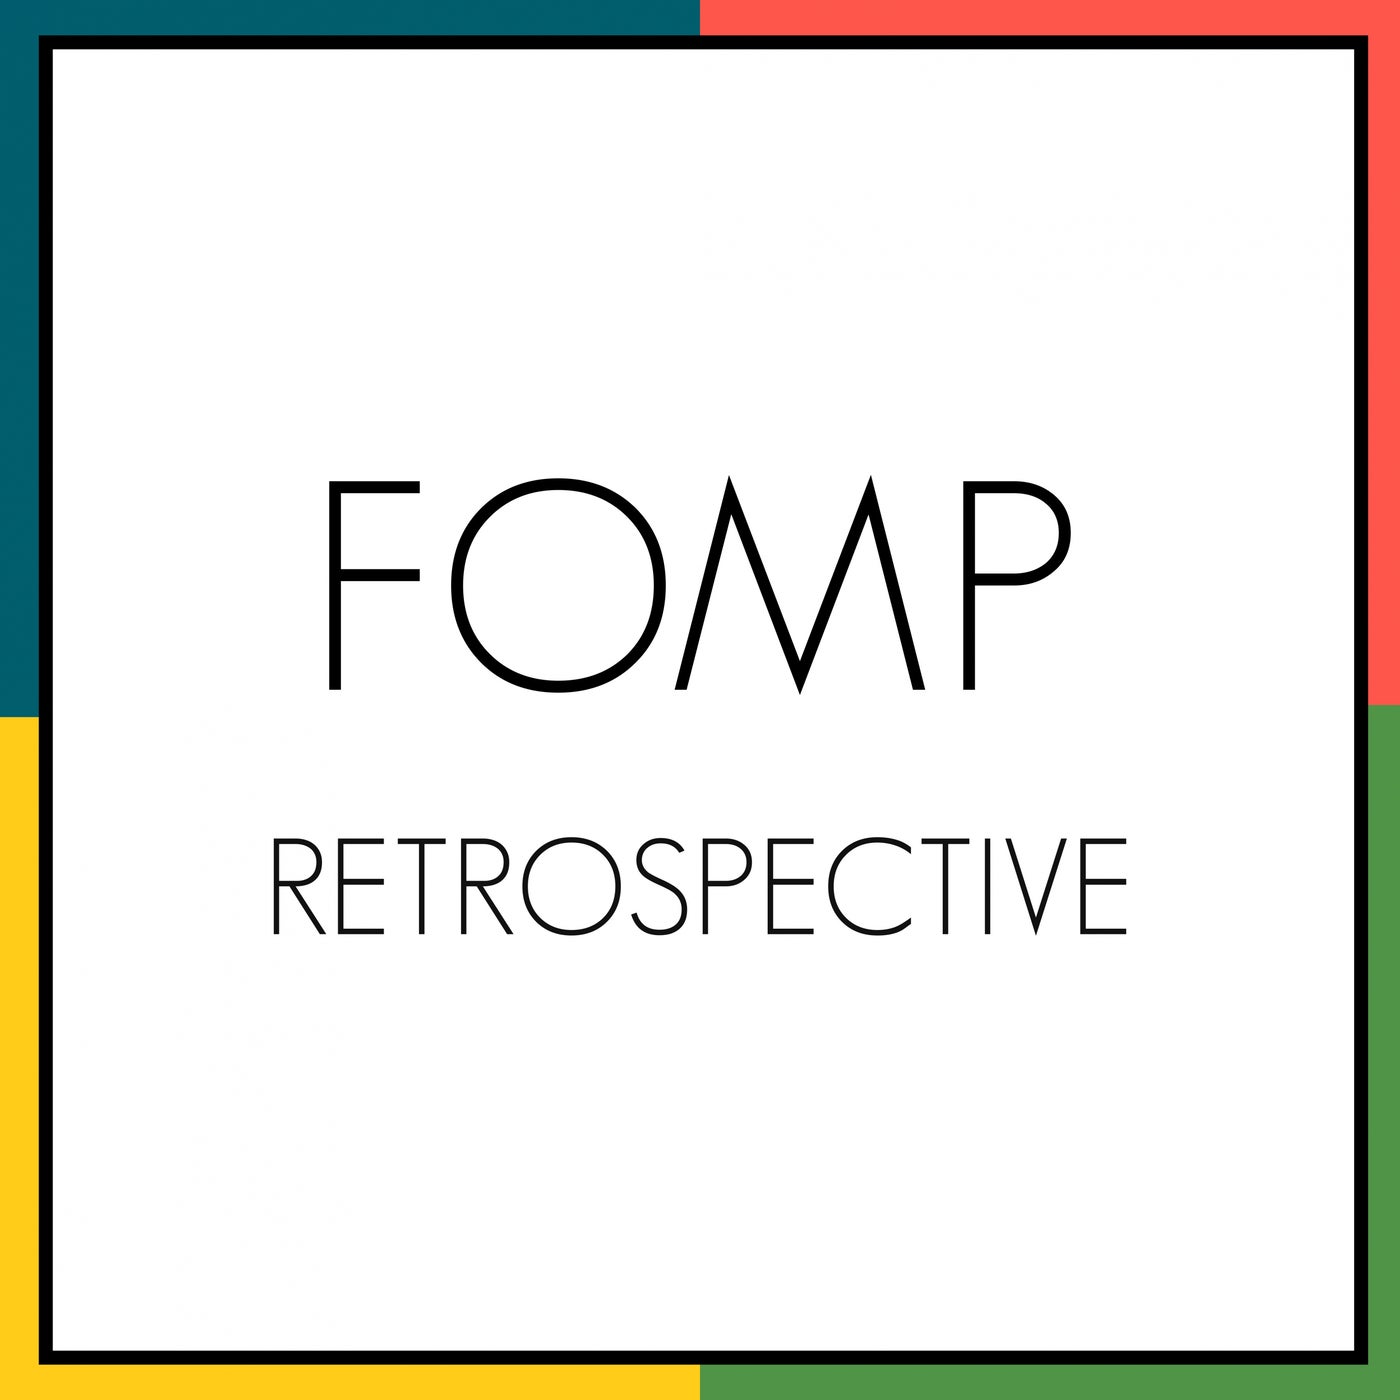 FOMP Retrospective